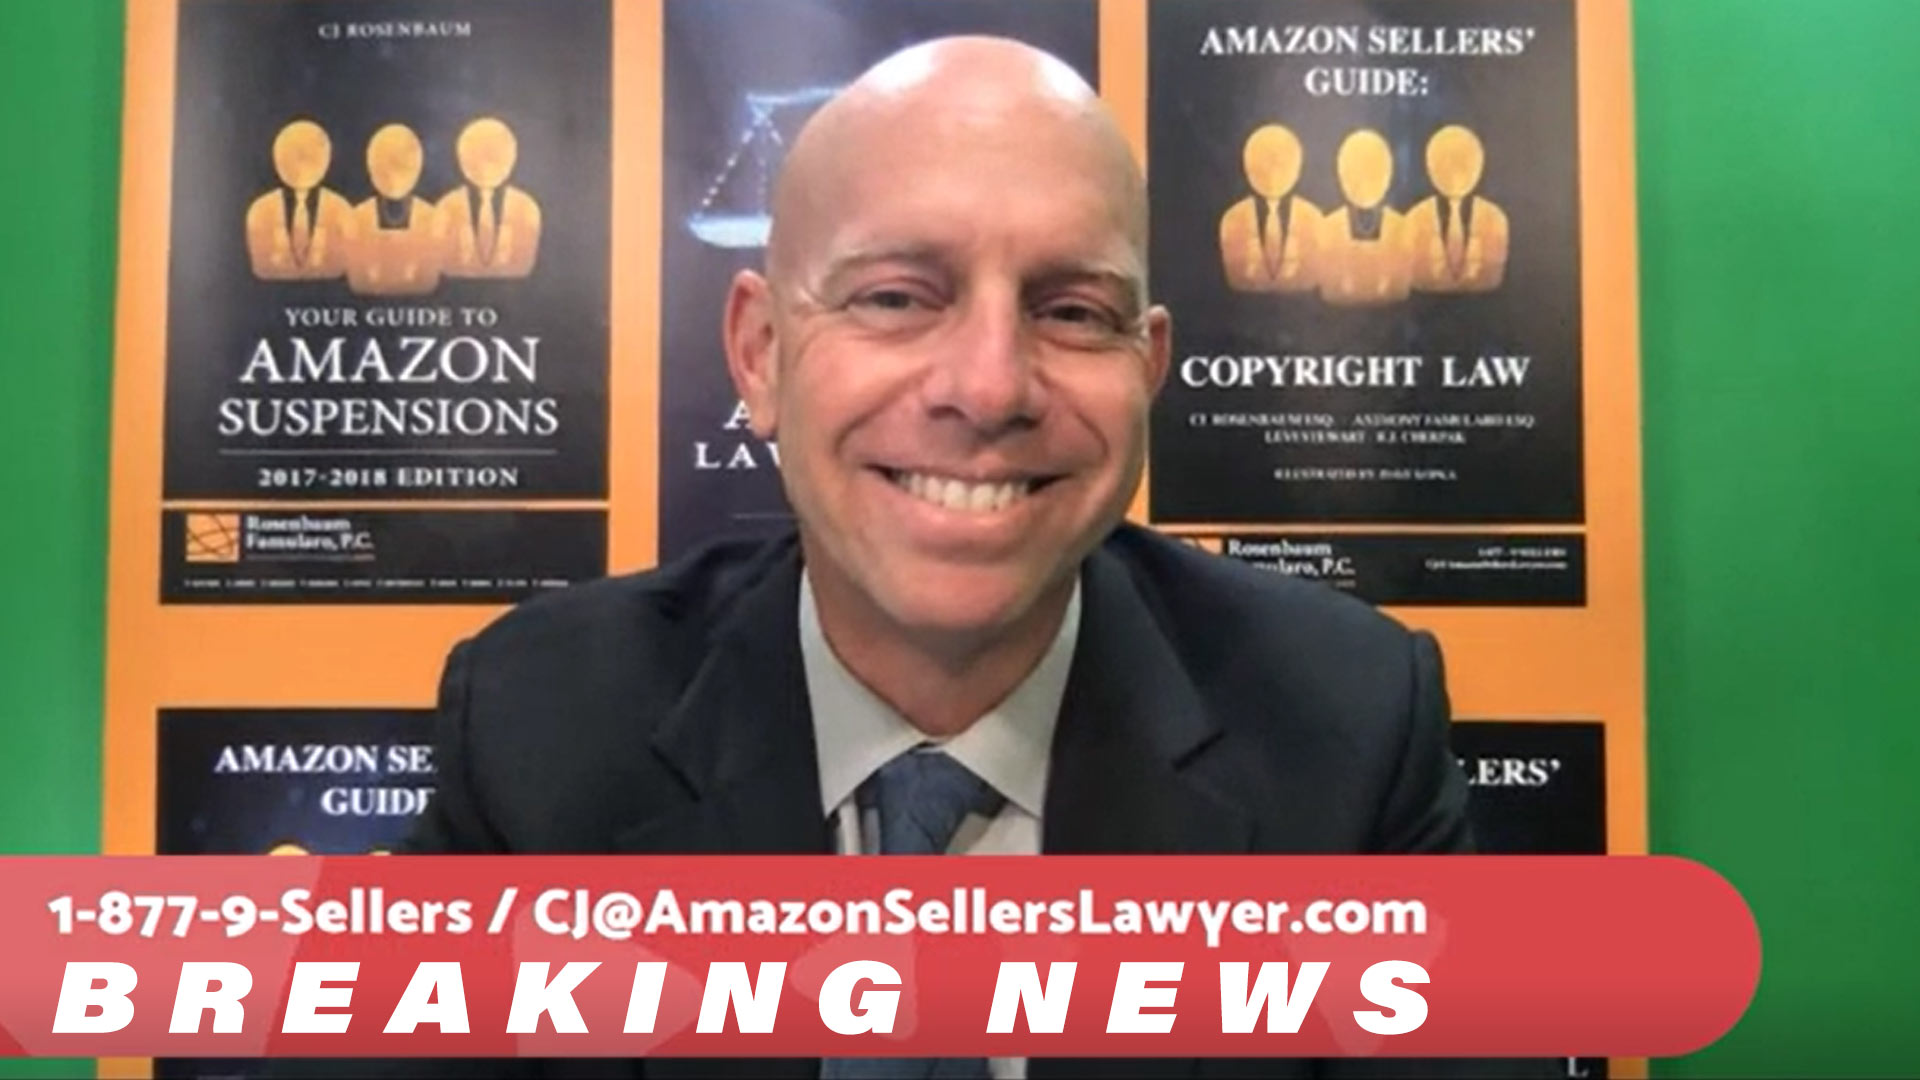 Amazon sellers breaking news